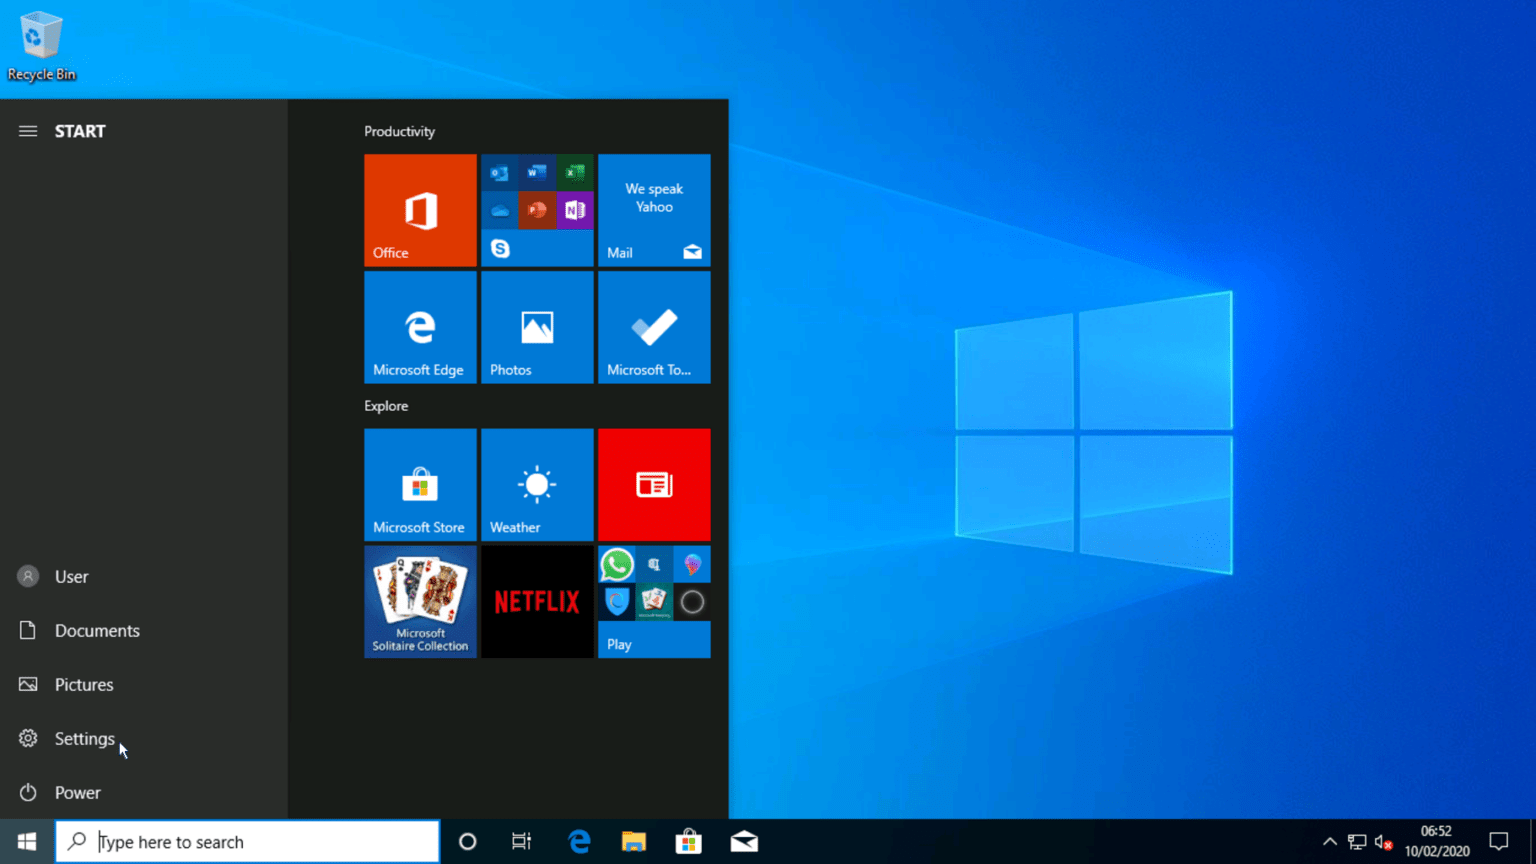 installing windows 10 on new pc